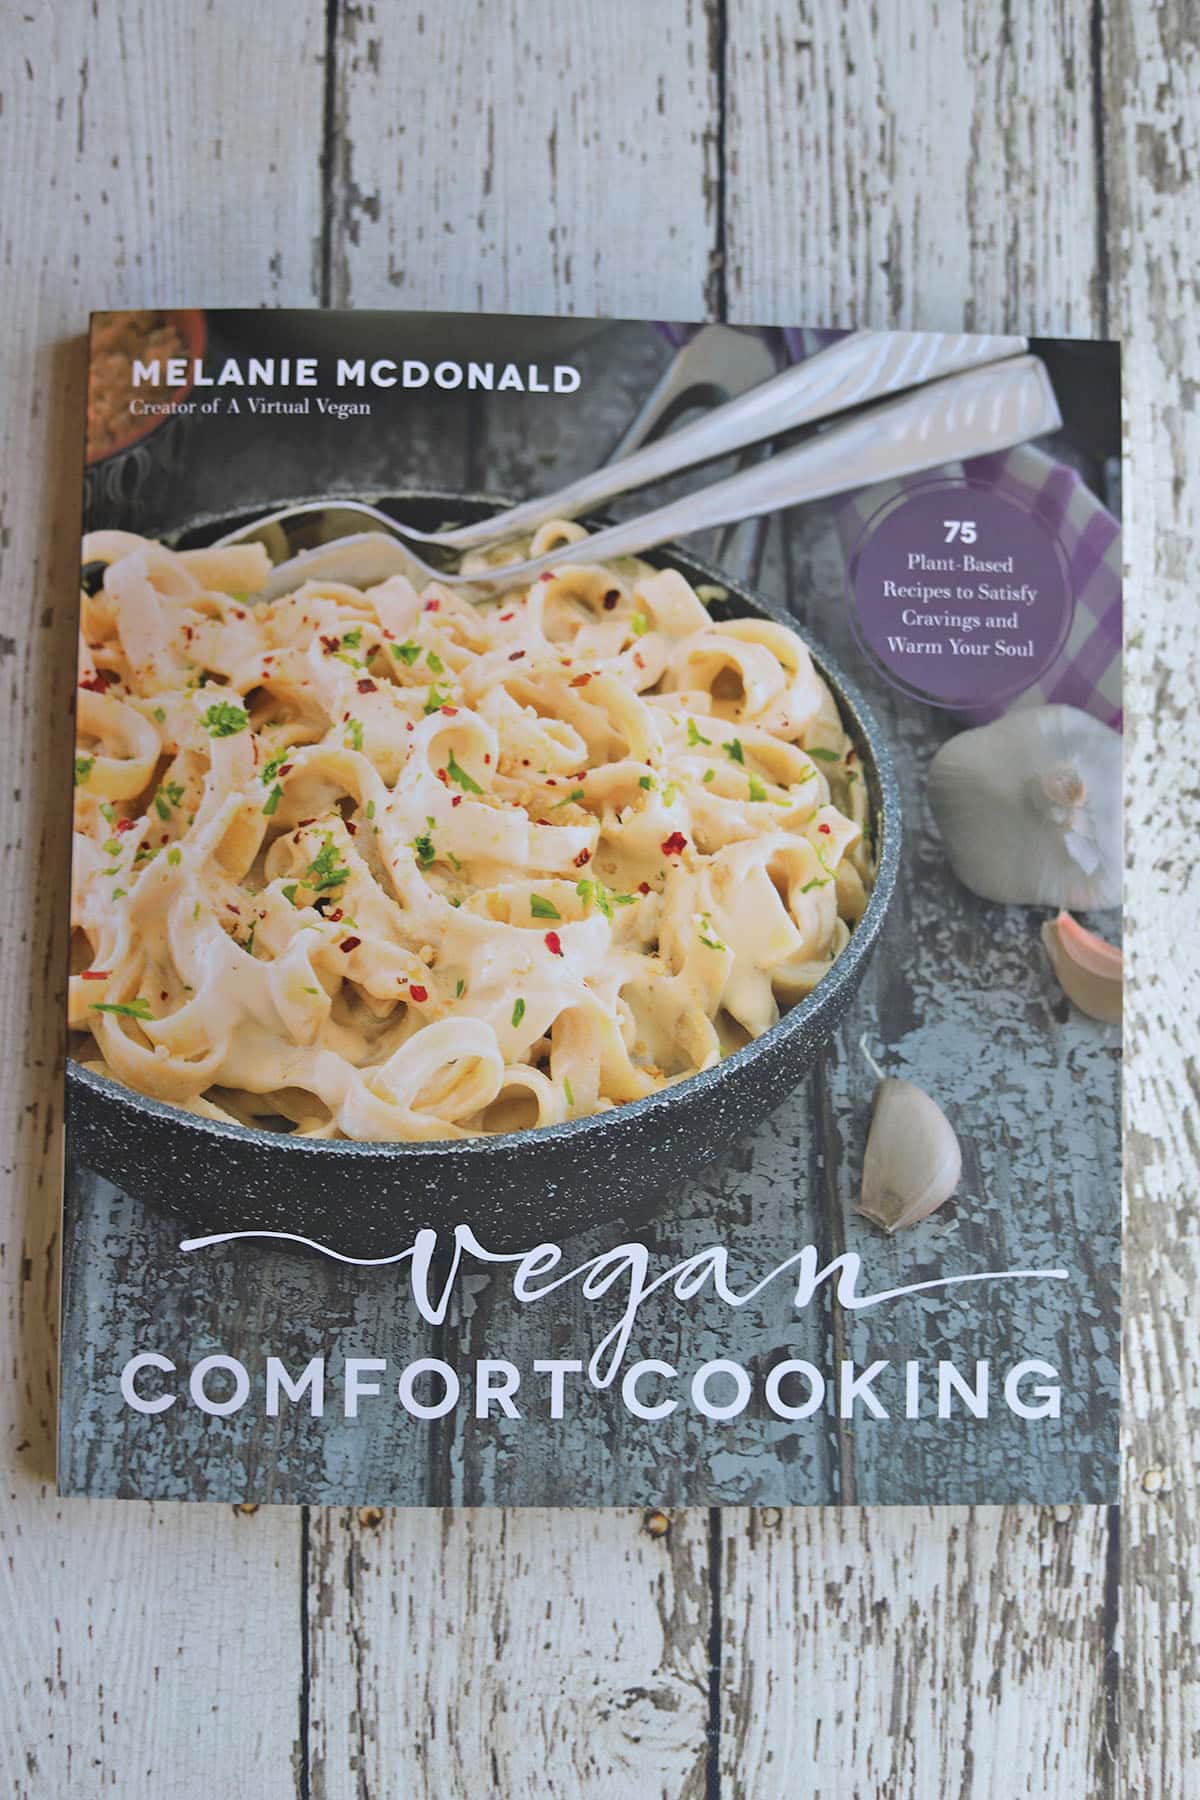 Vegan Comfort Cooking cookbook on table.